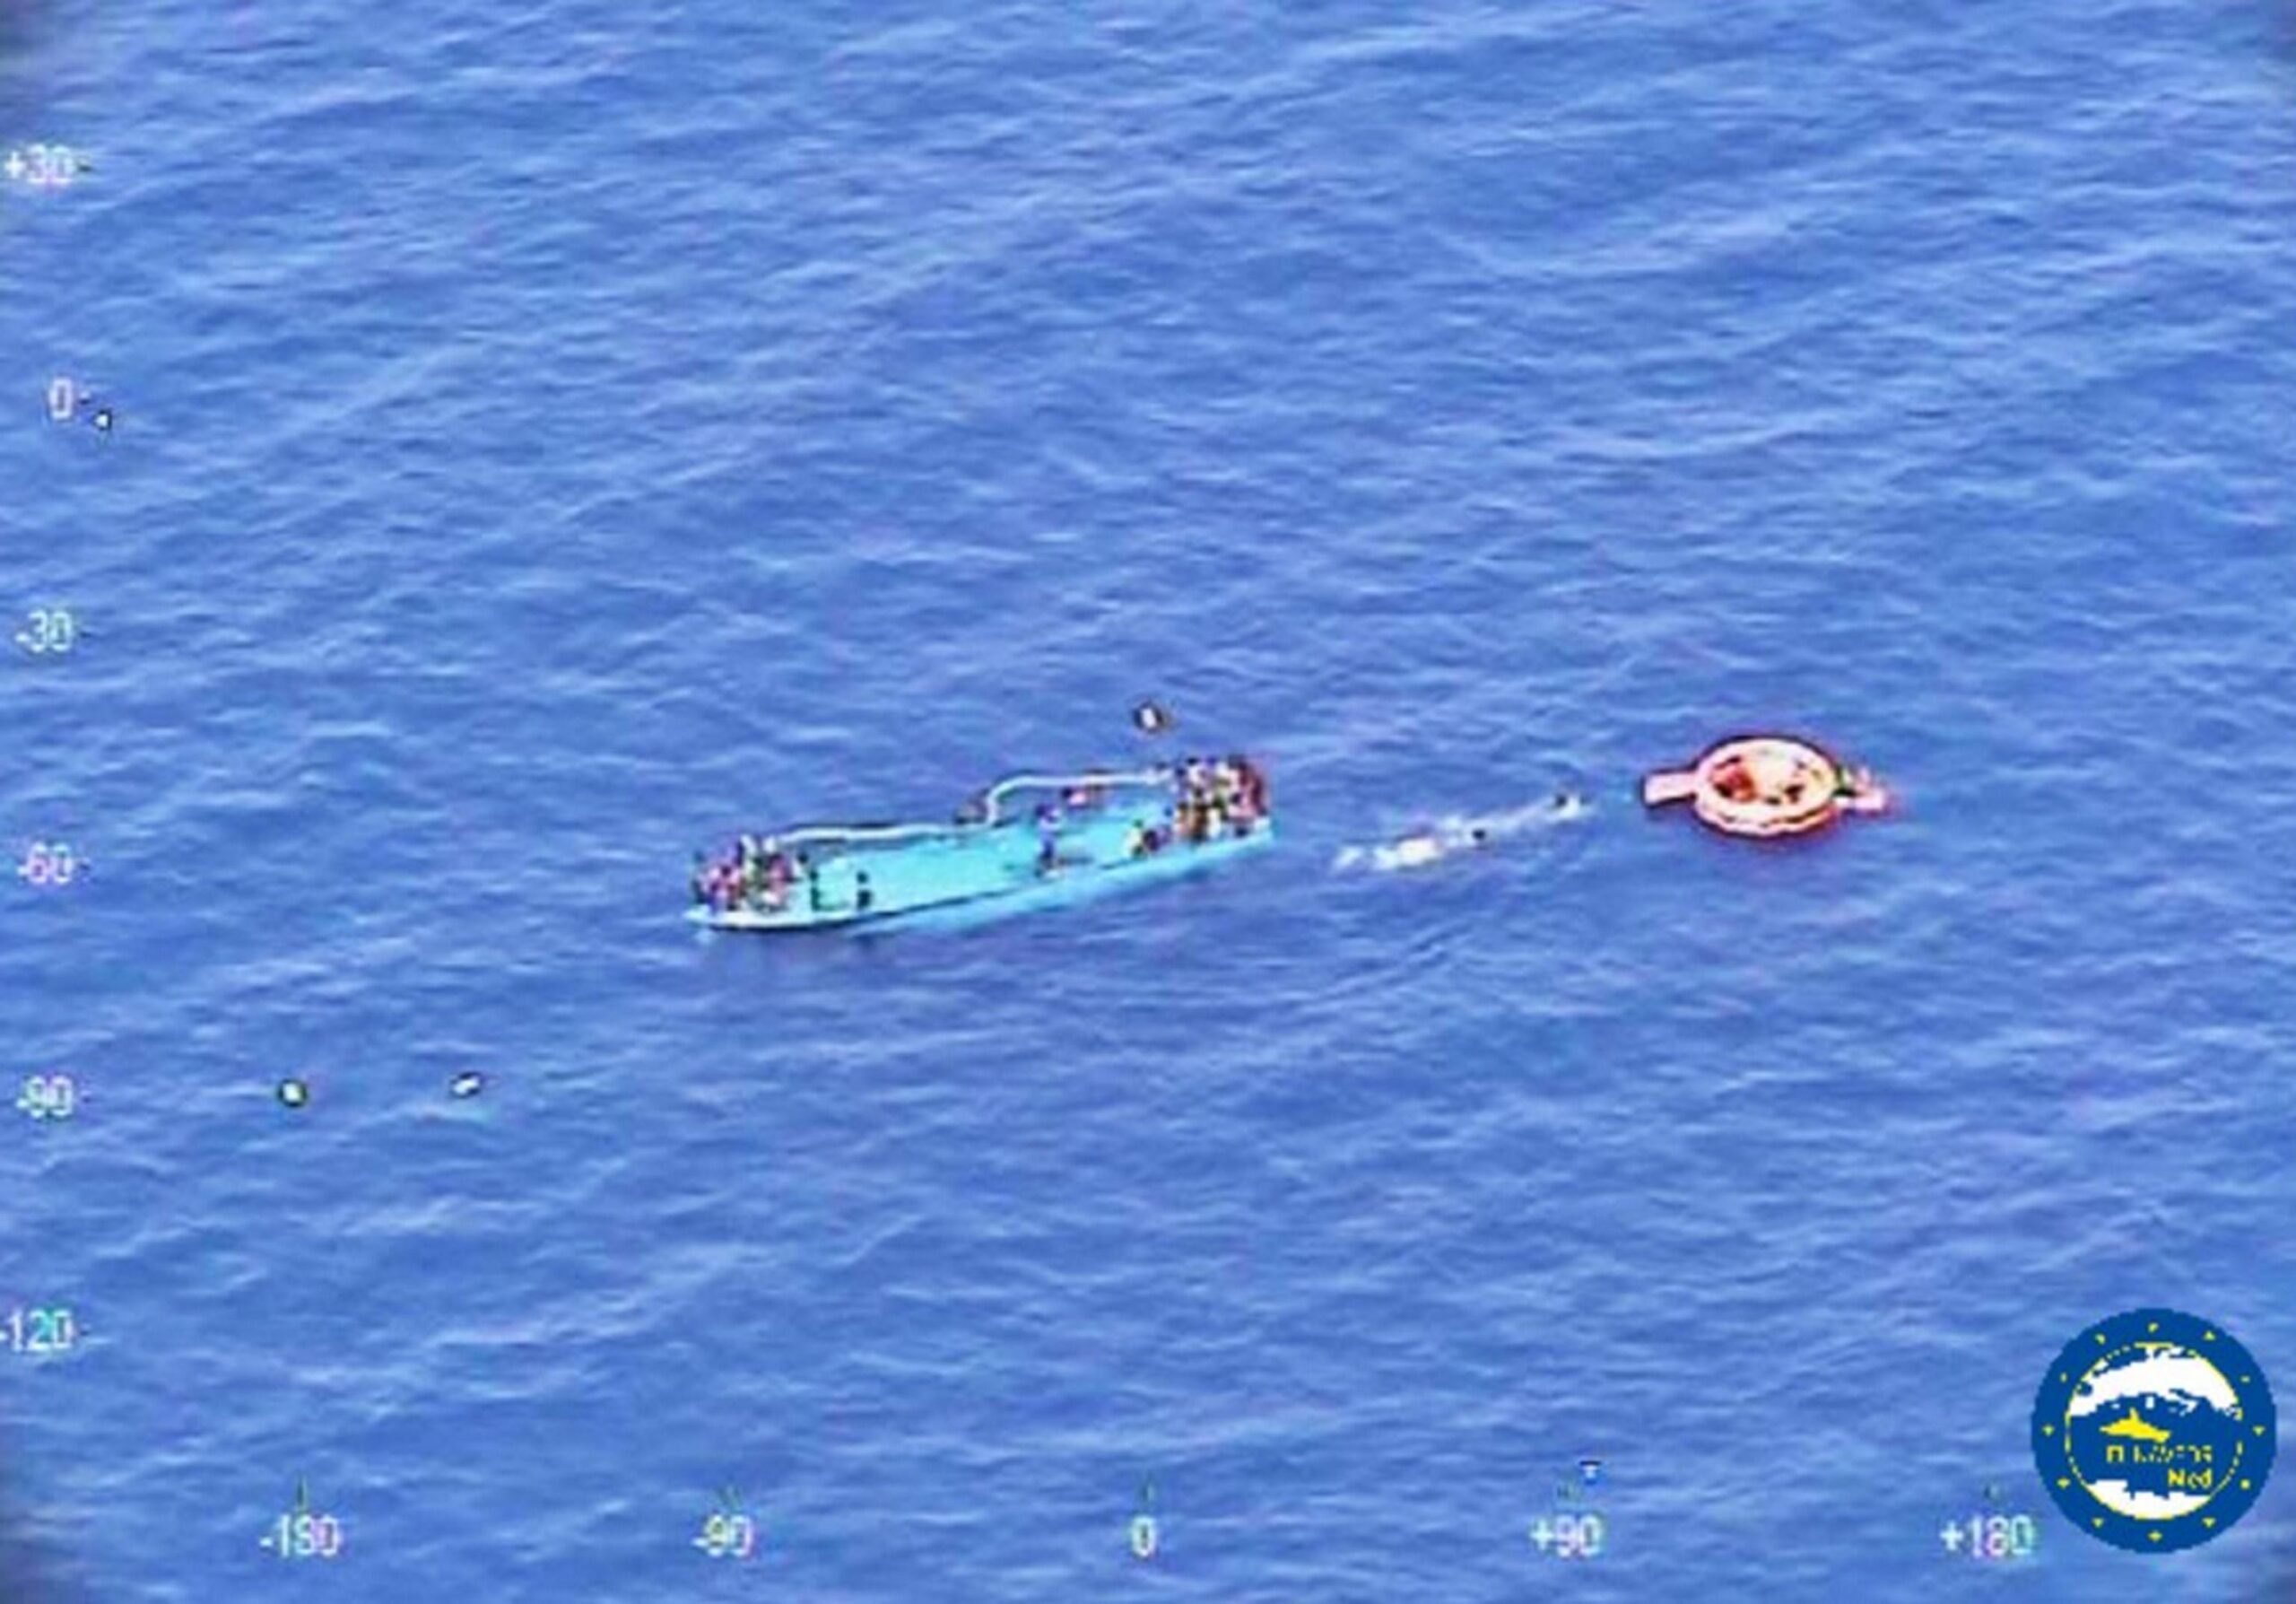 Dozens of children drown as shipwrecks claim 700 lives, survivors say